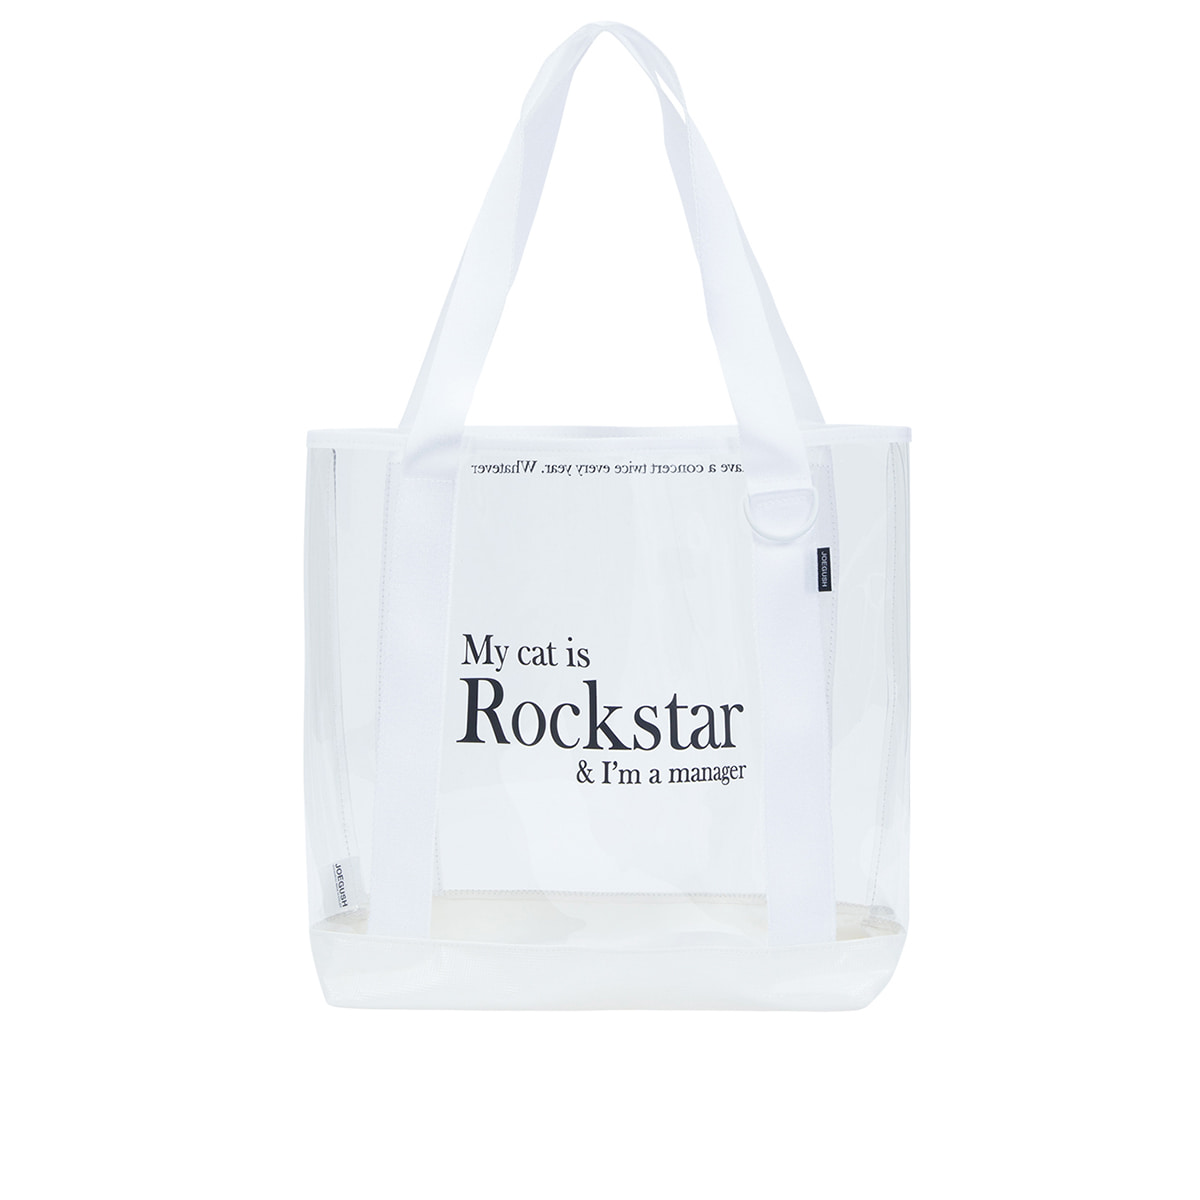 Rockstar pvc tote bag (White/Black) [Online Exclusive]